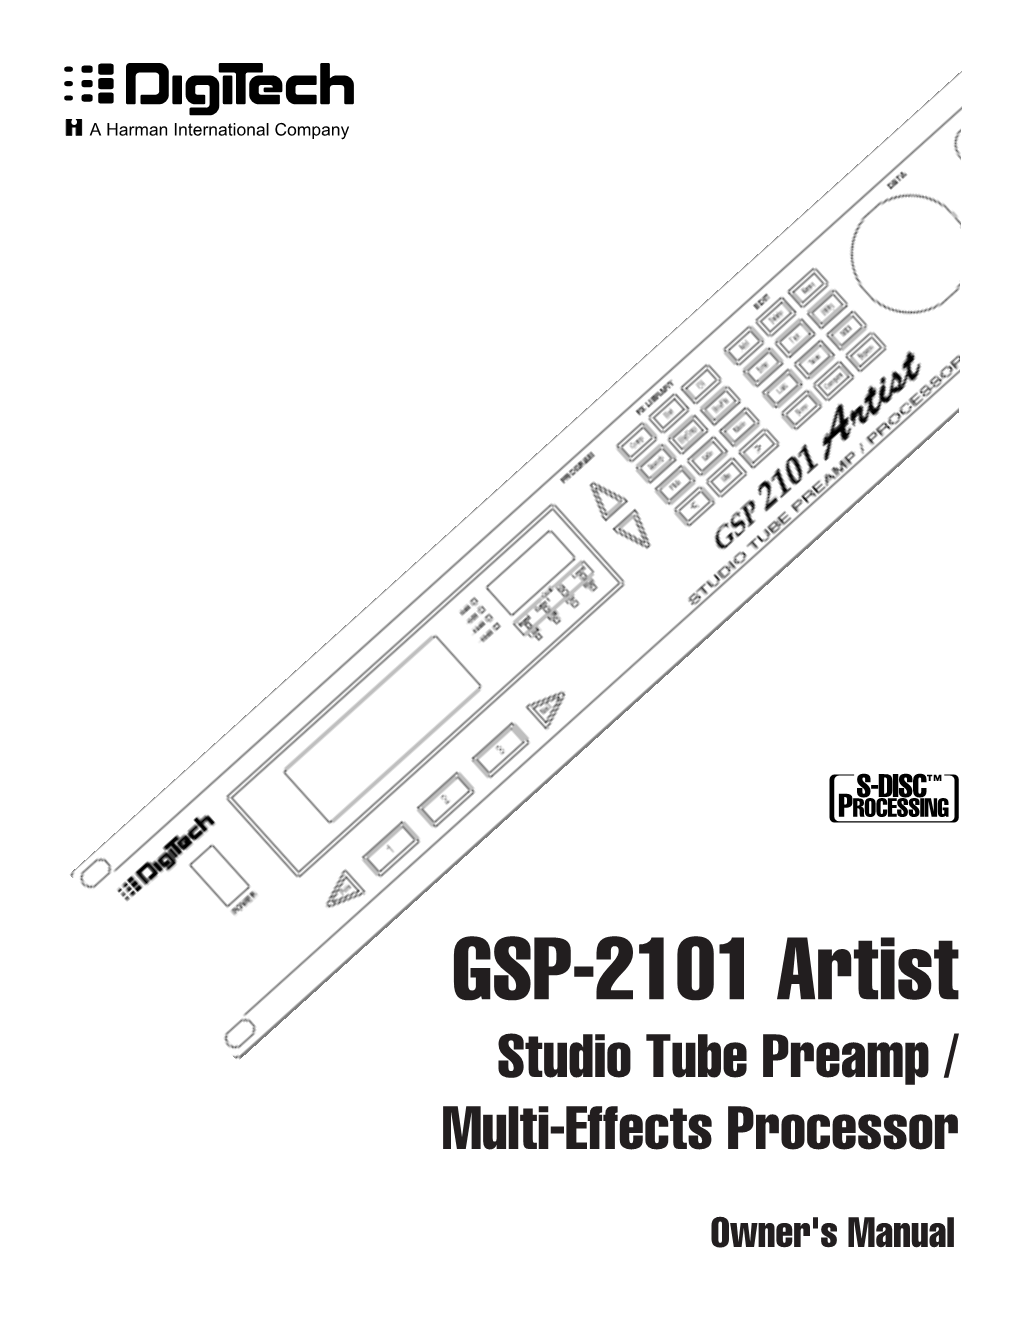 GSP-2101 Artist Studio Tube Preamp / Multi-Effects Processor